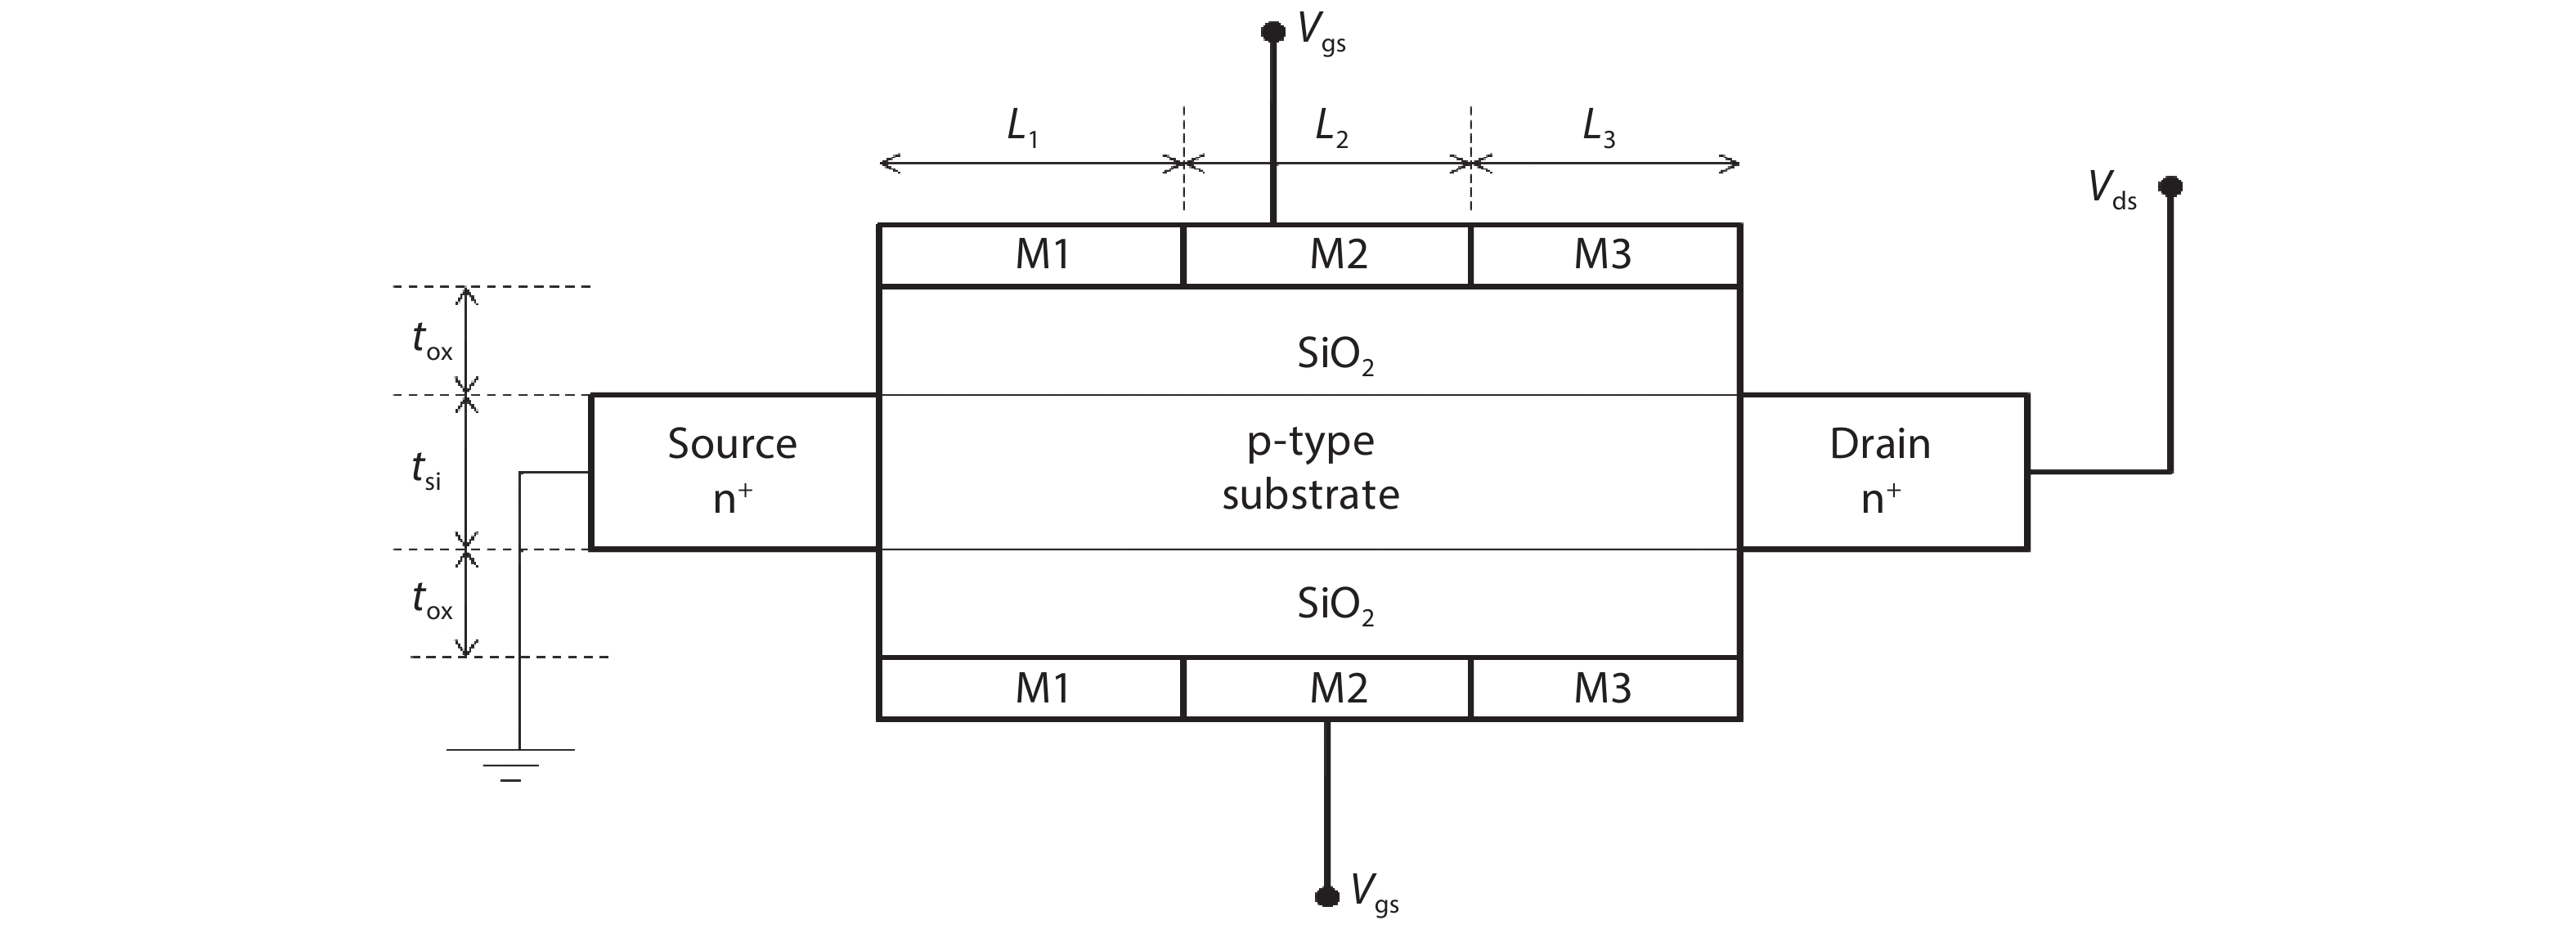 TM-DG MOSFET structure.